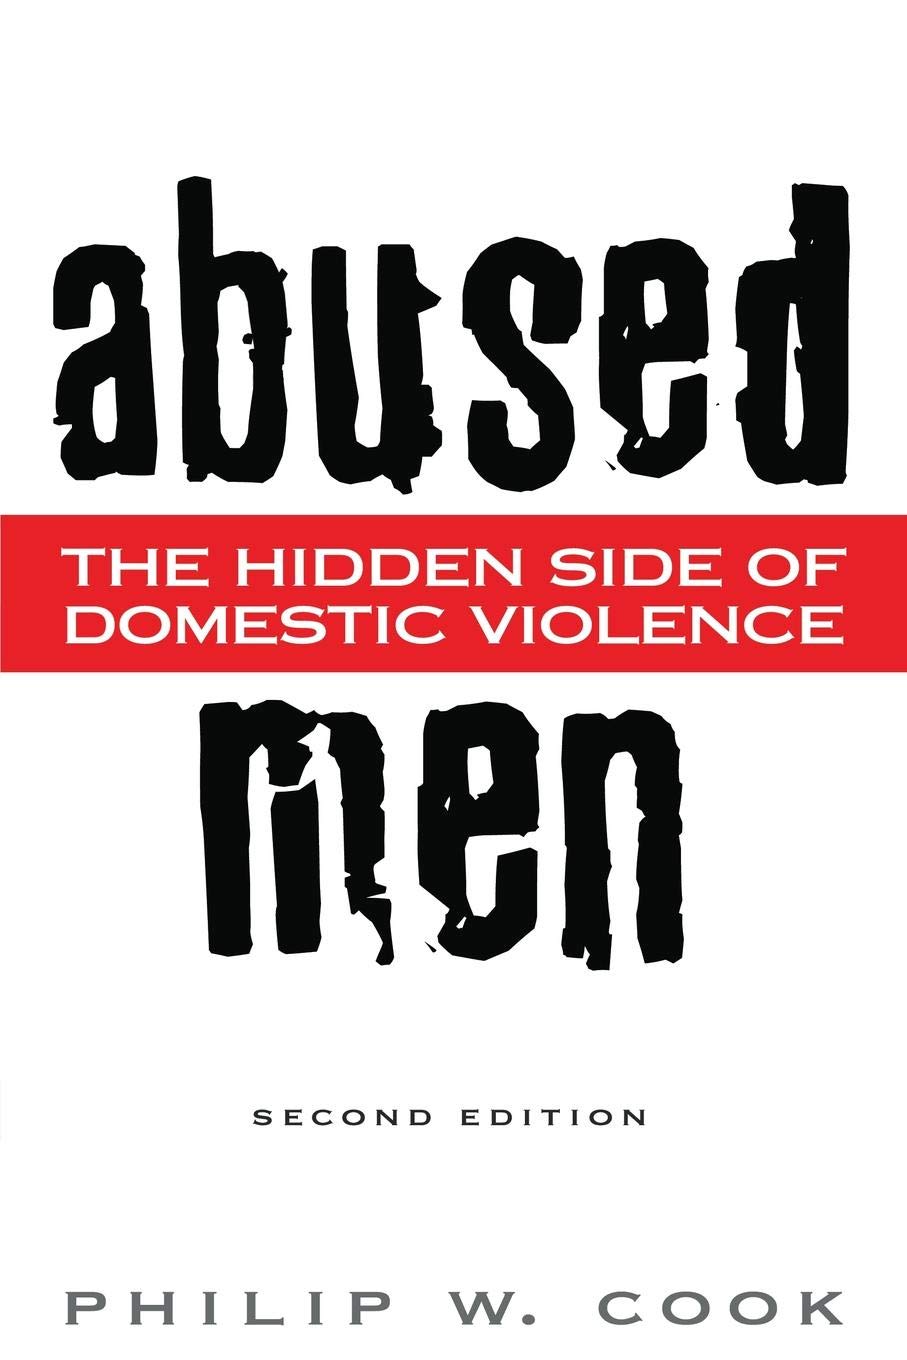 Abused men